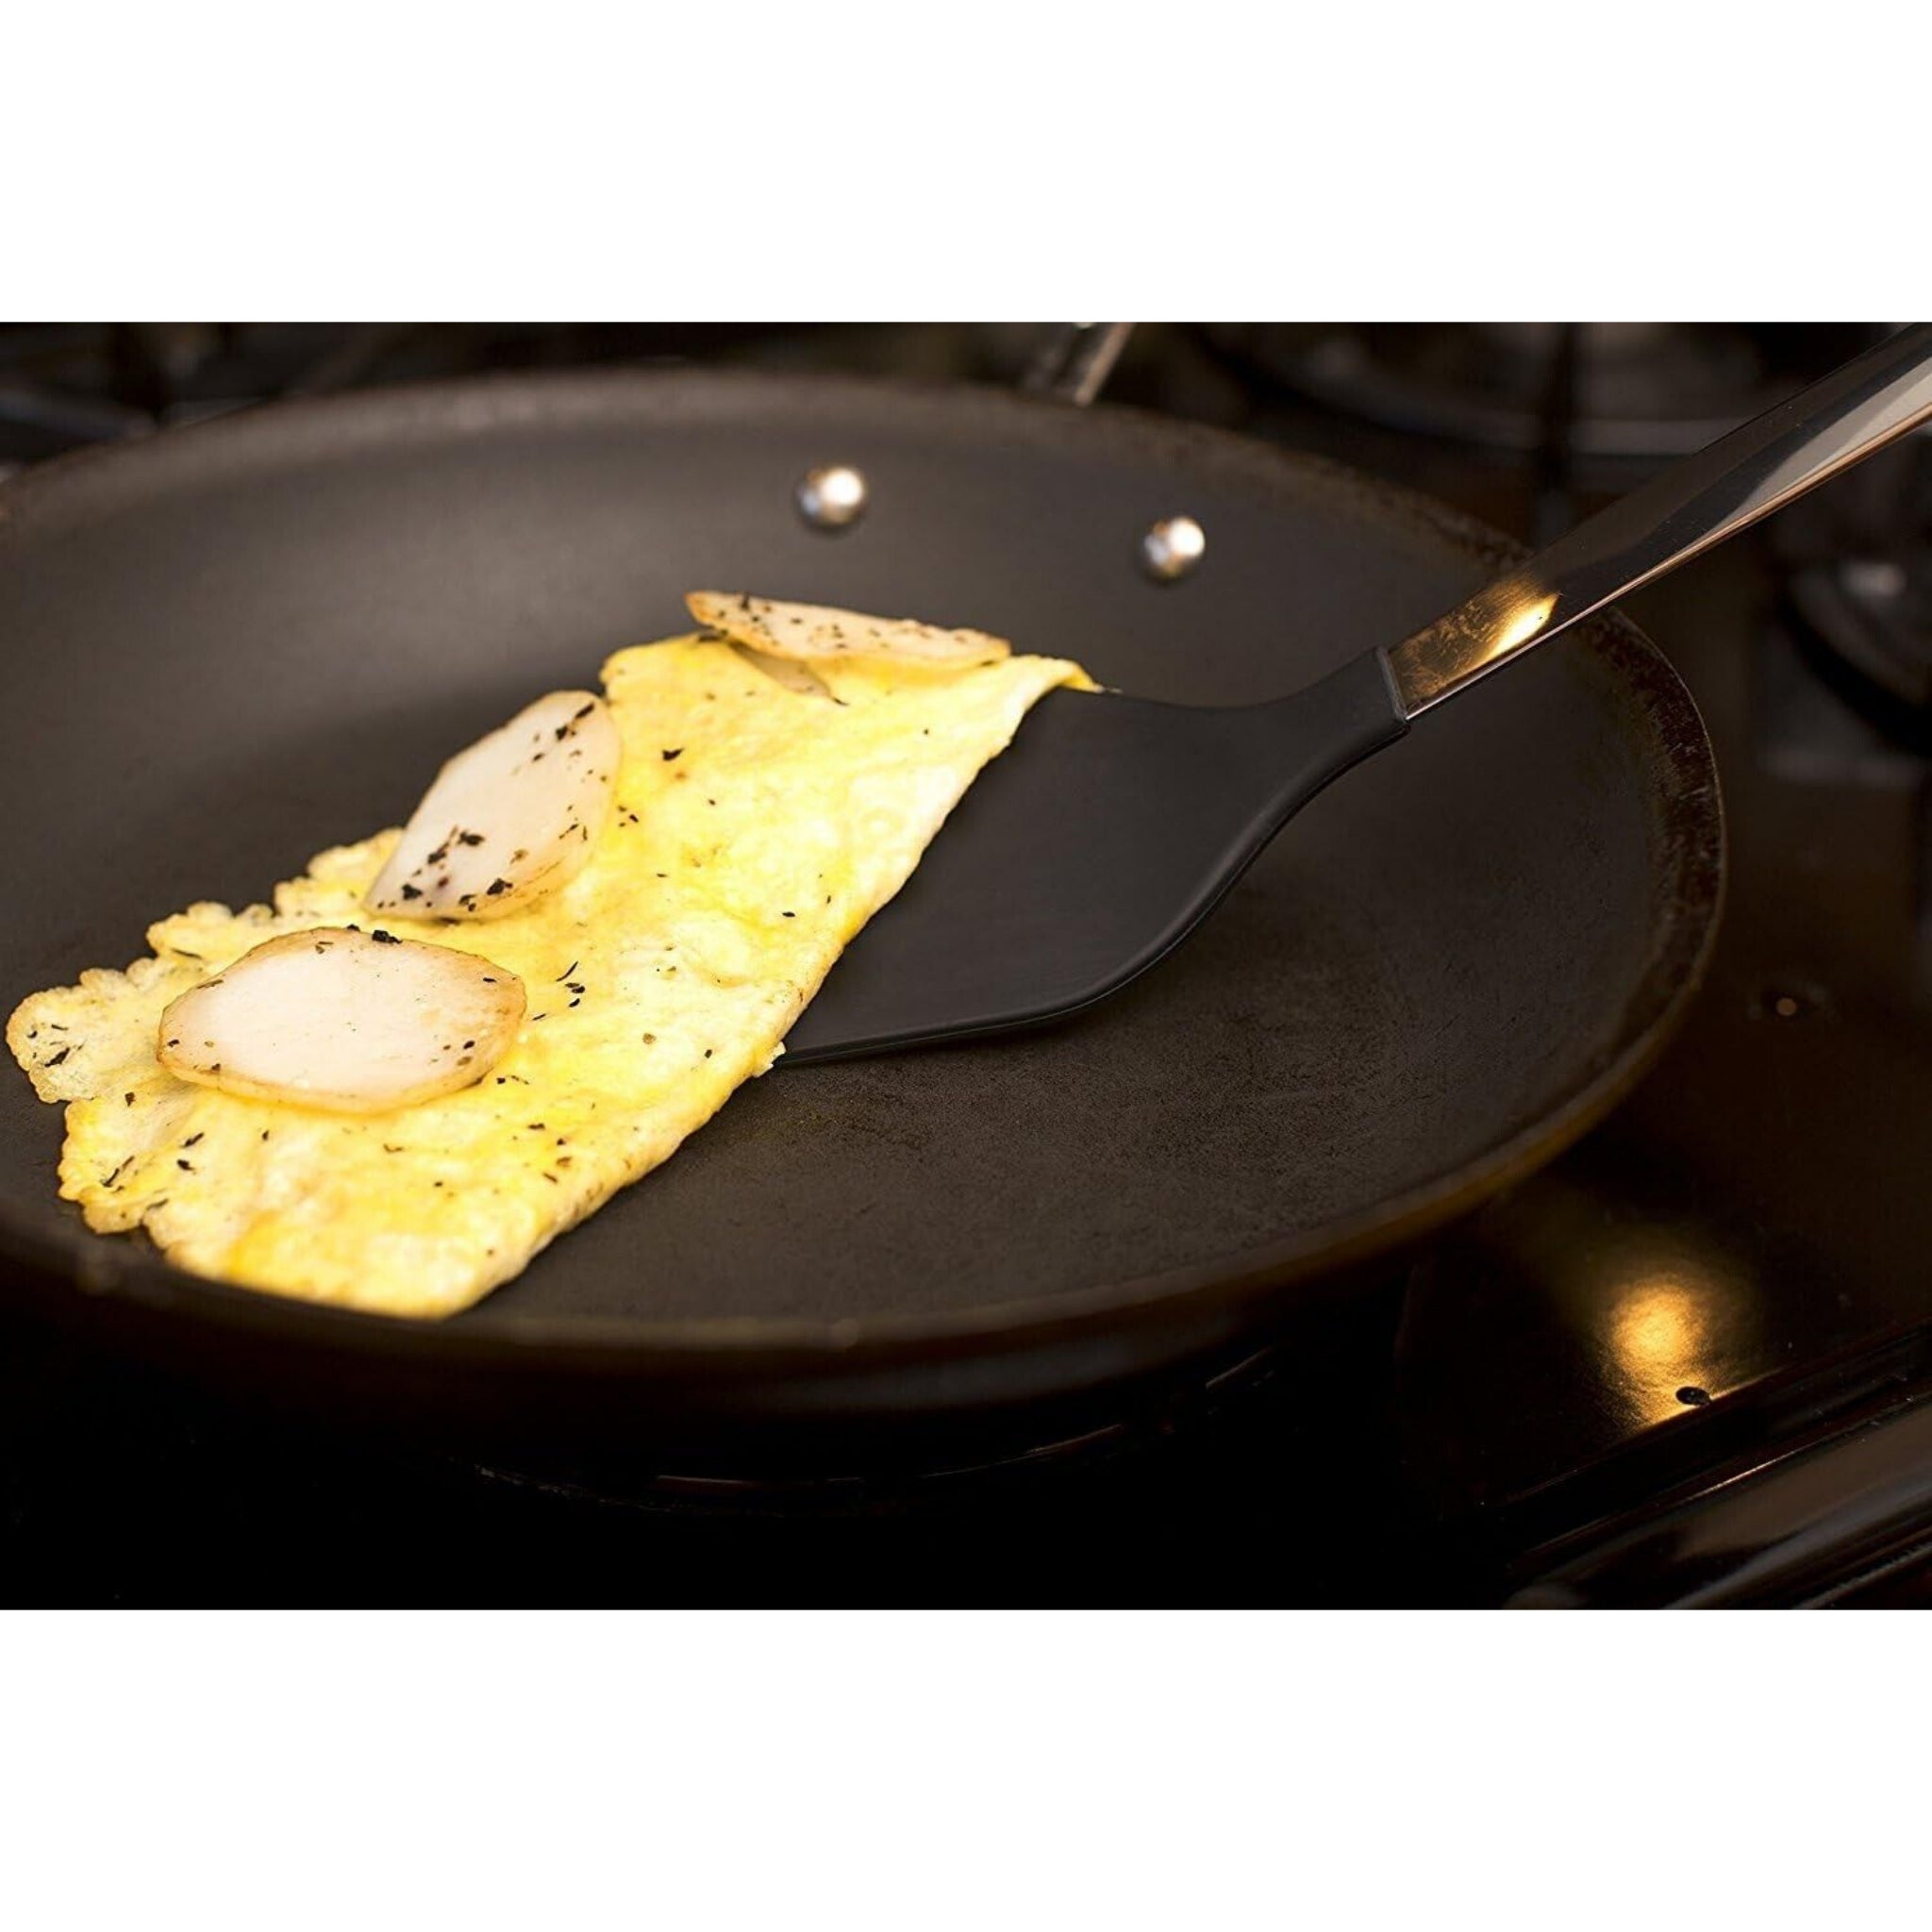 Kitchen Cooking Non-stick HeatResistant Slotted Pancake Turner